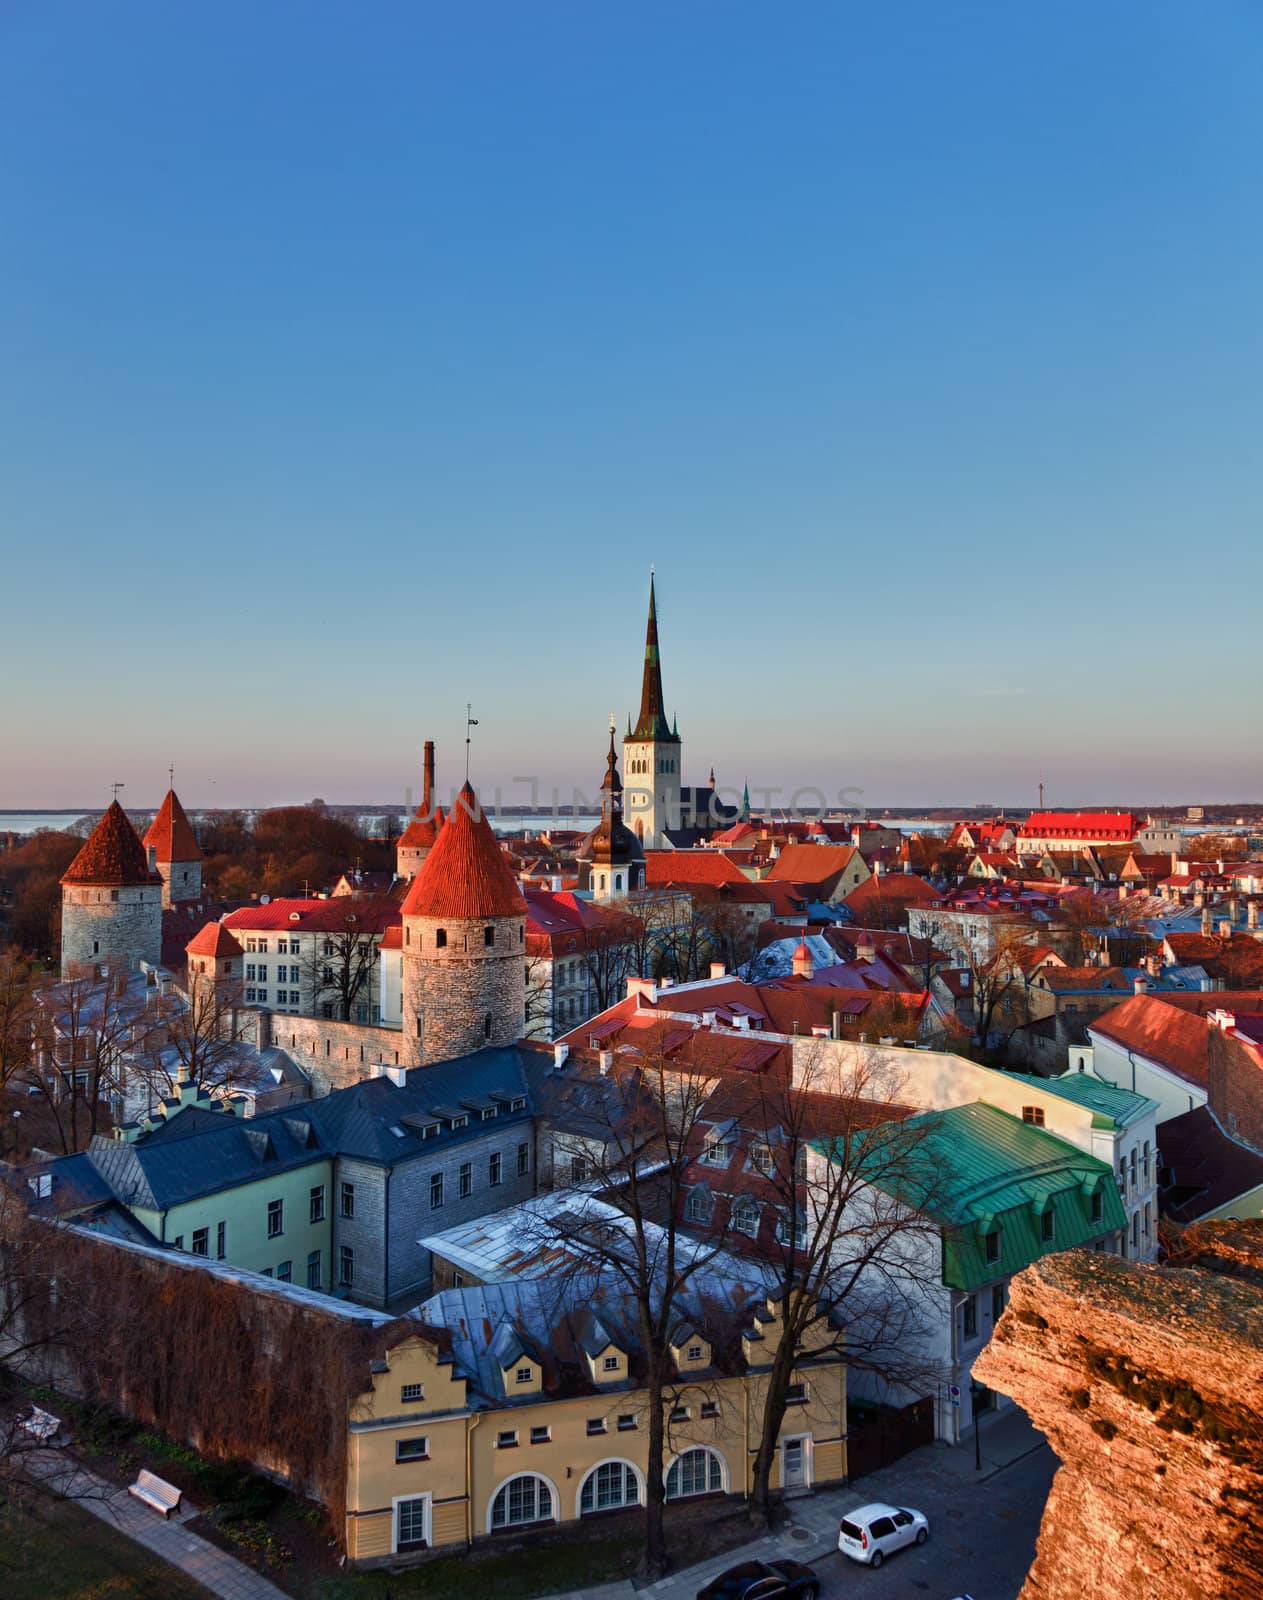 Old town of Tallinn Estonia by steheap